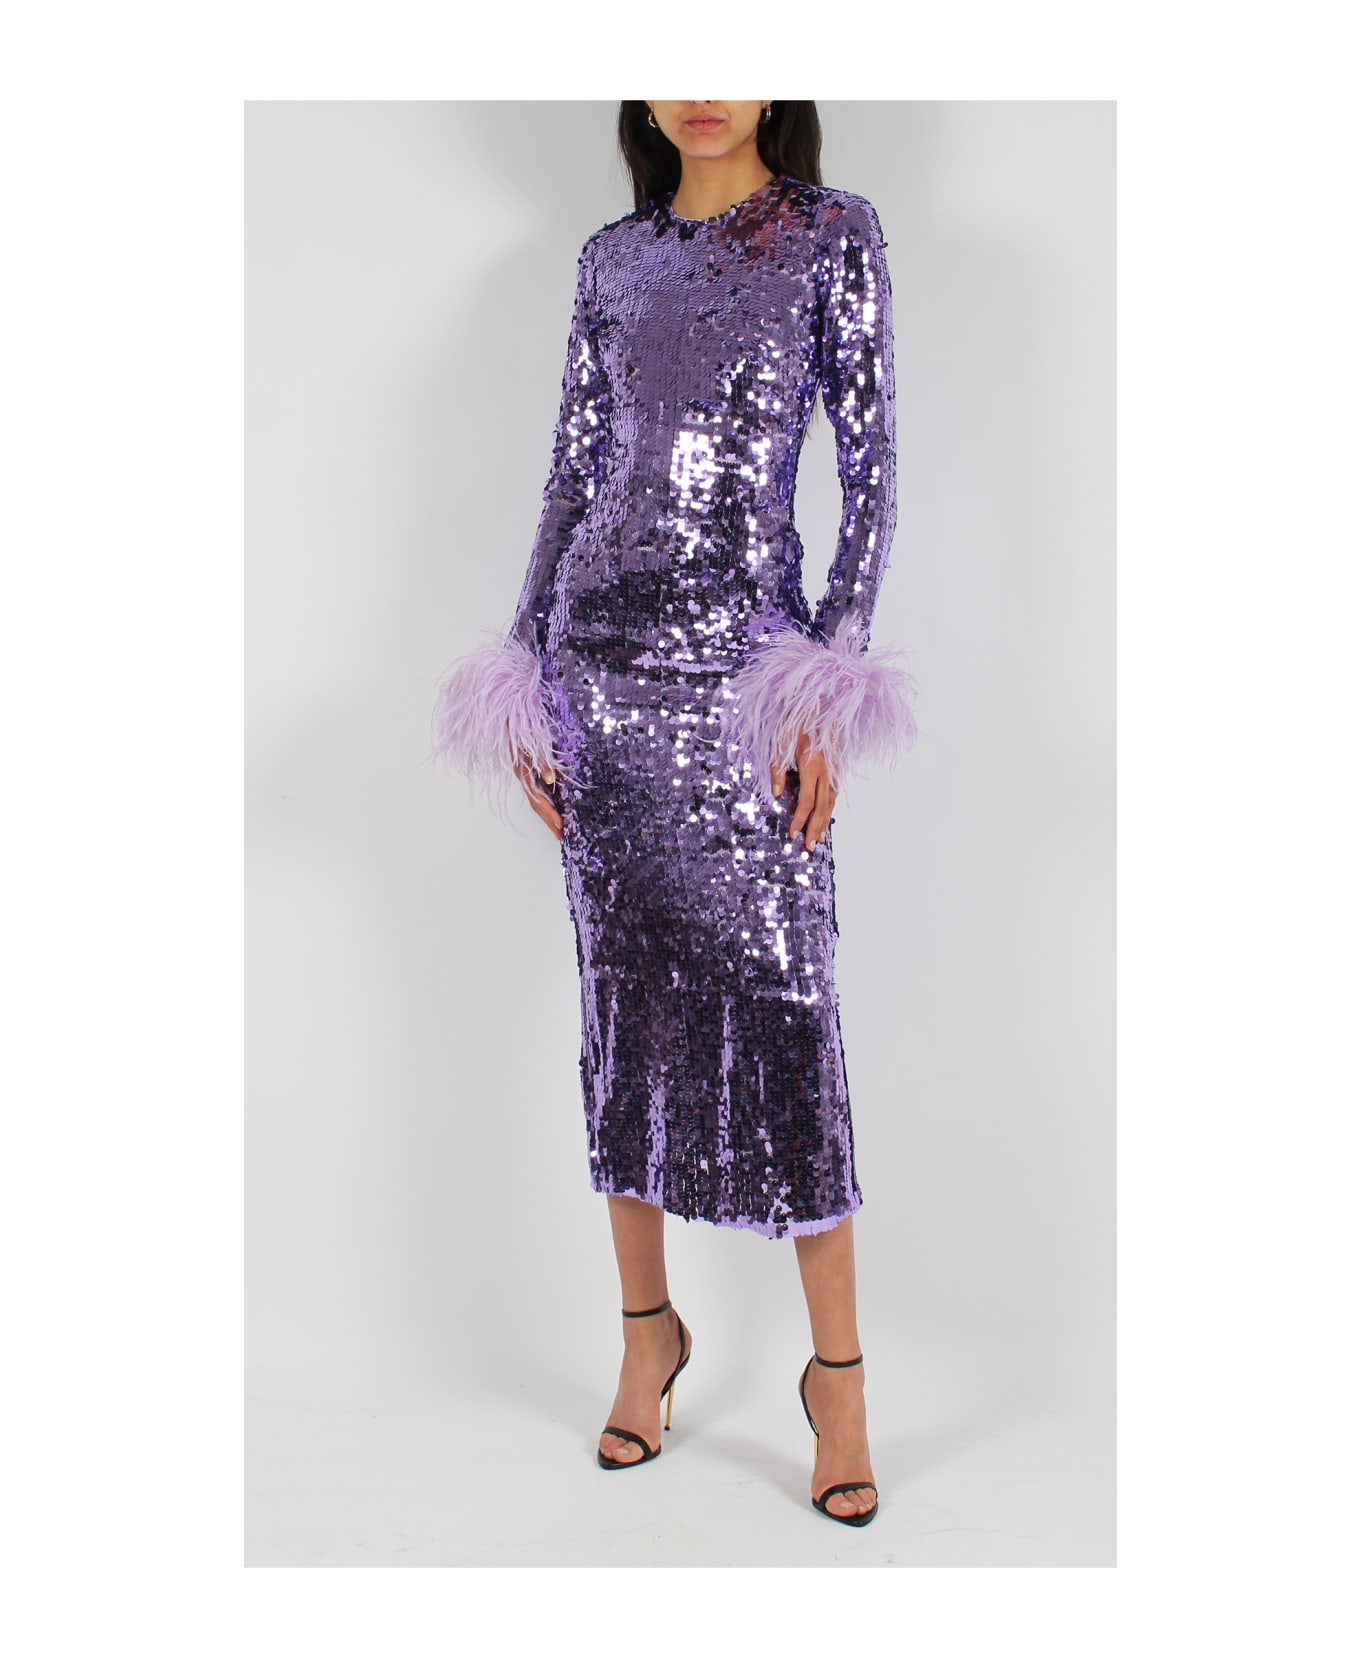 NEW ARRIVALS Veronique In Le Palace Dress - Pink & Purple